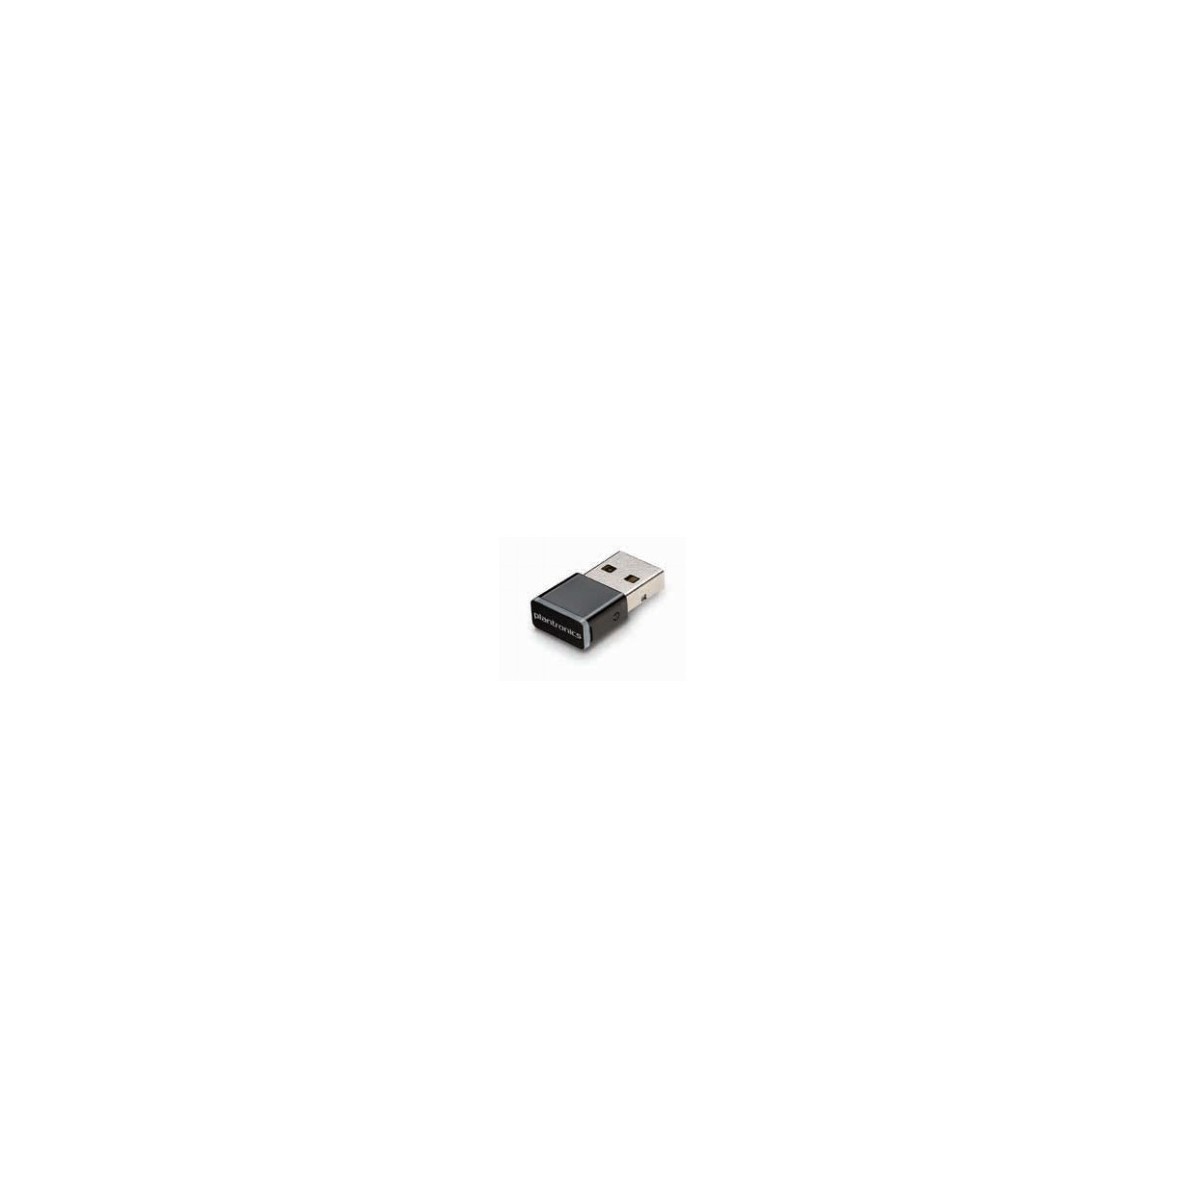 Poly 204880-01 - USB adapter - Black